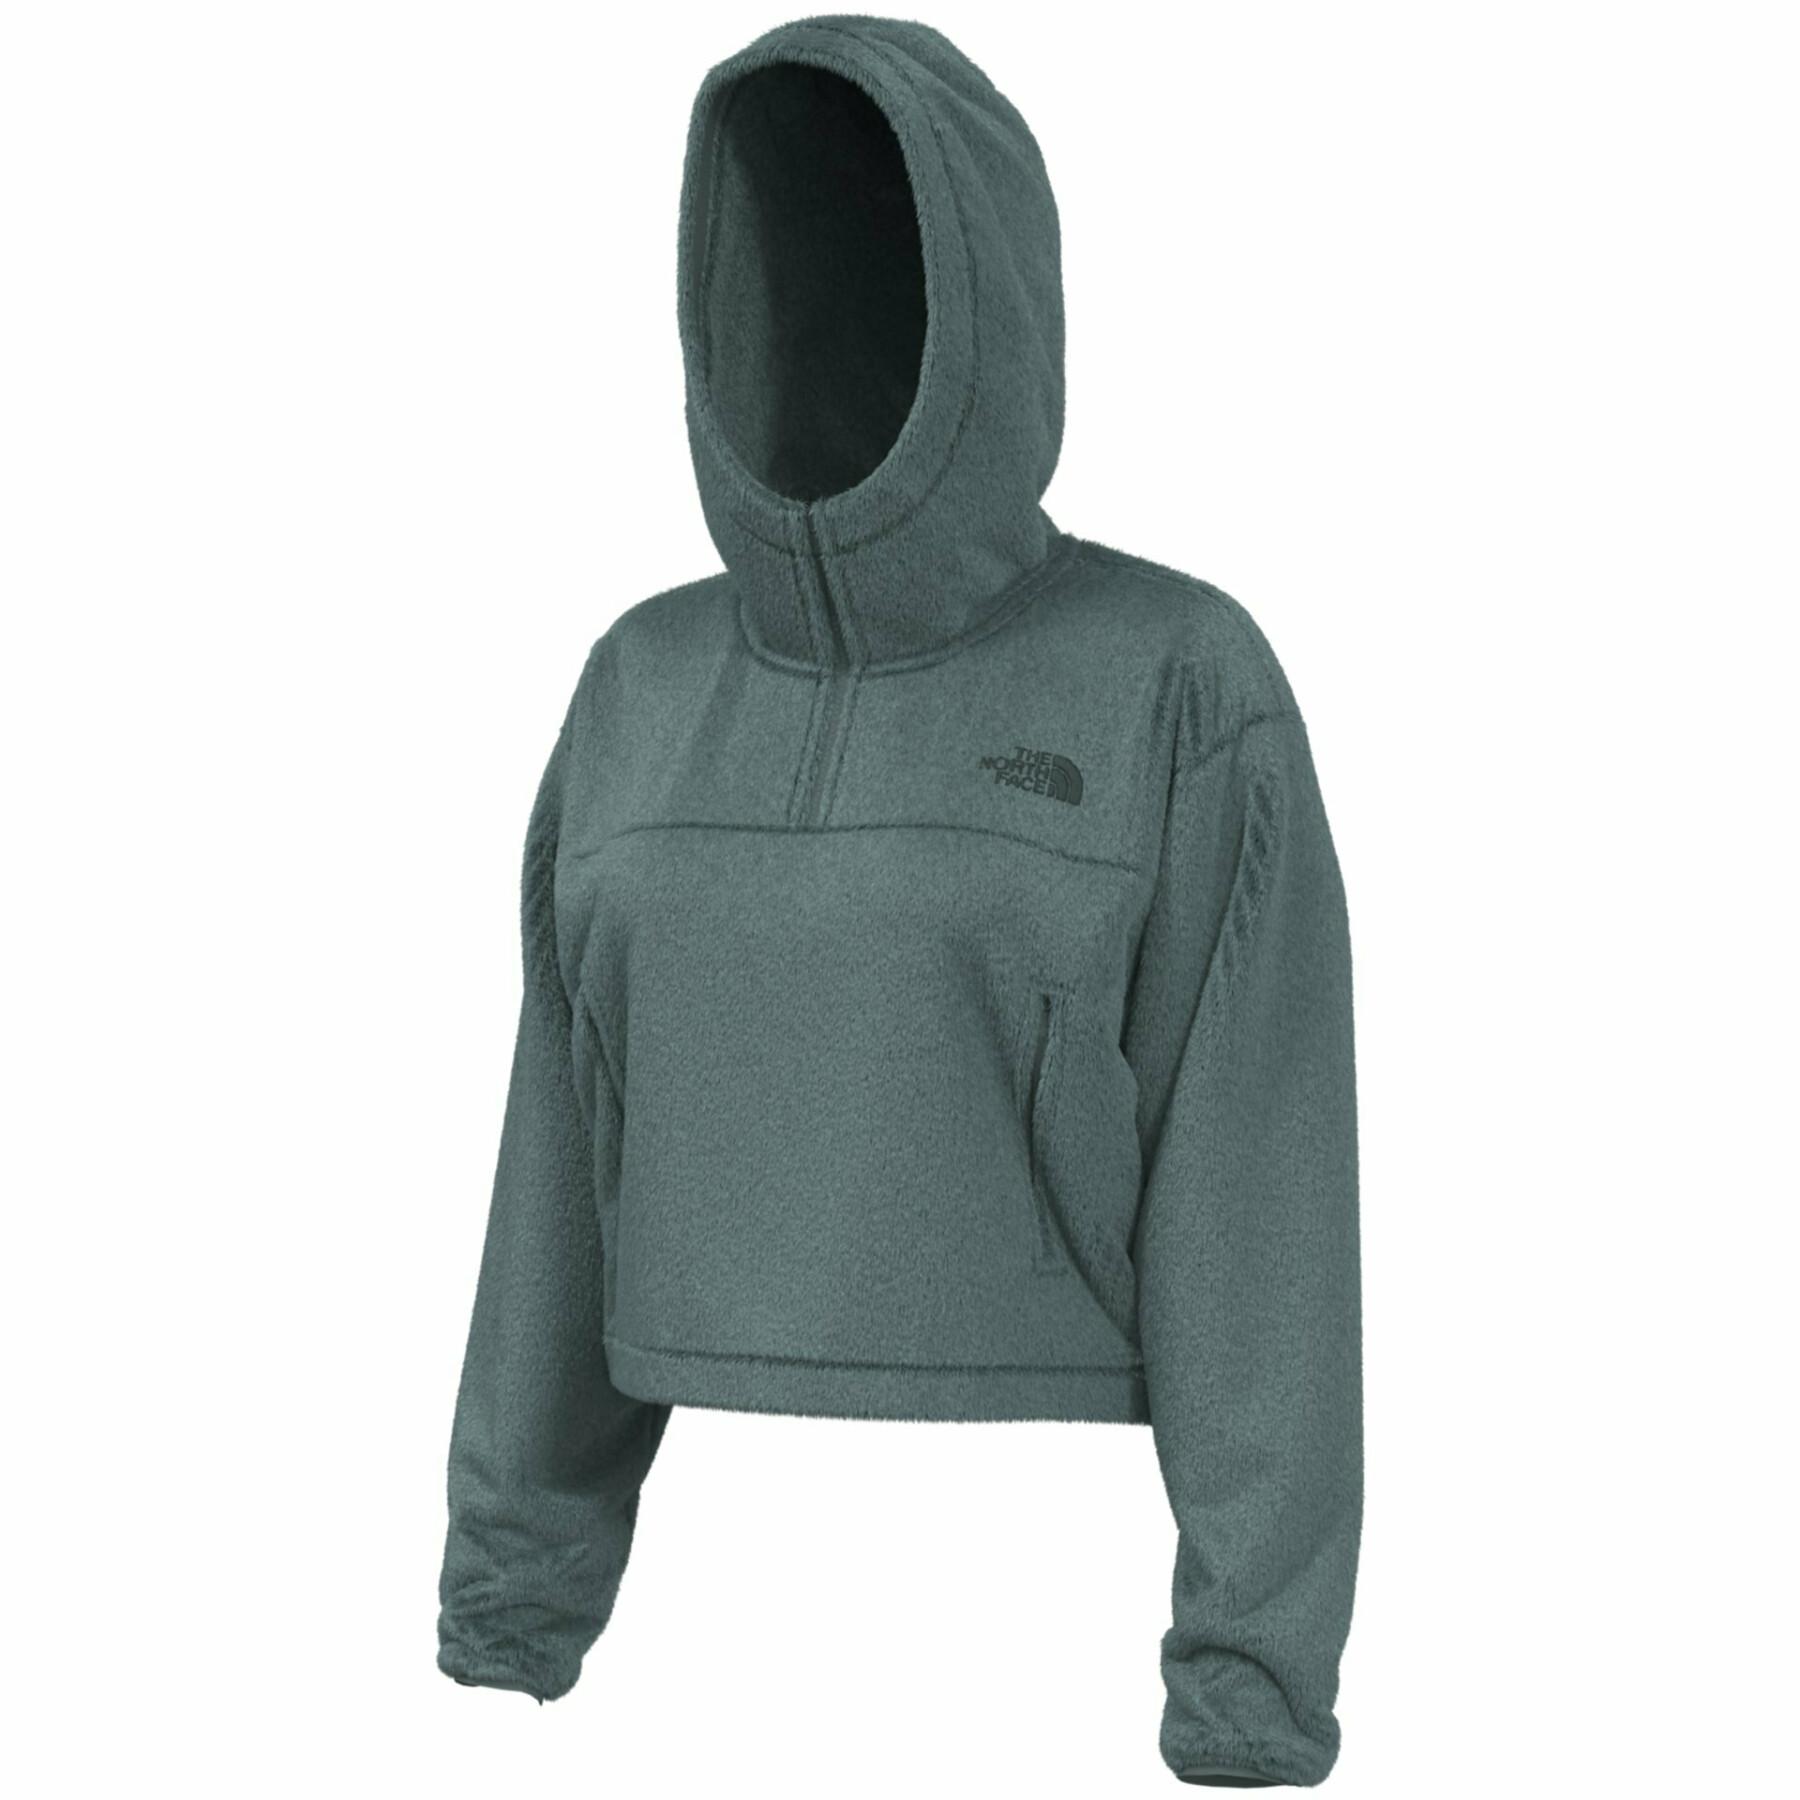 Women's zip-up sweatshirt The North Face Osito